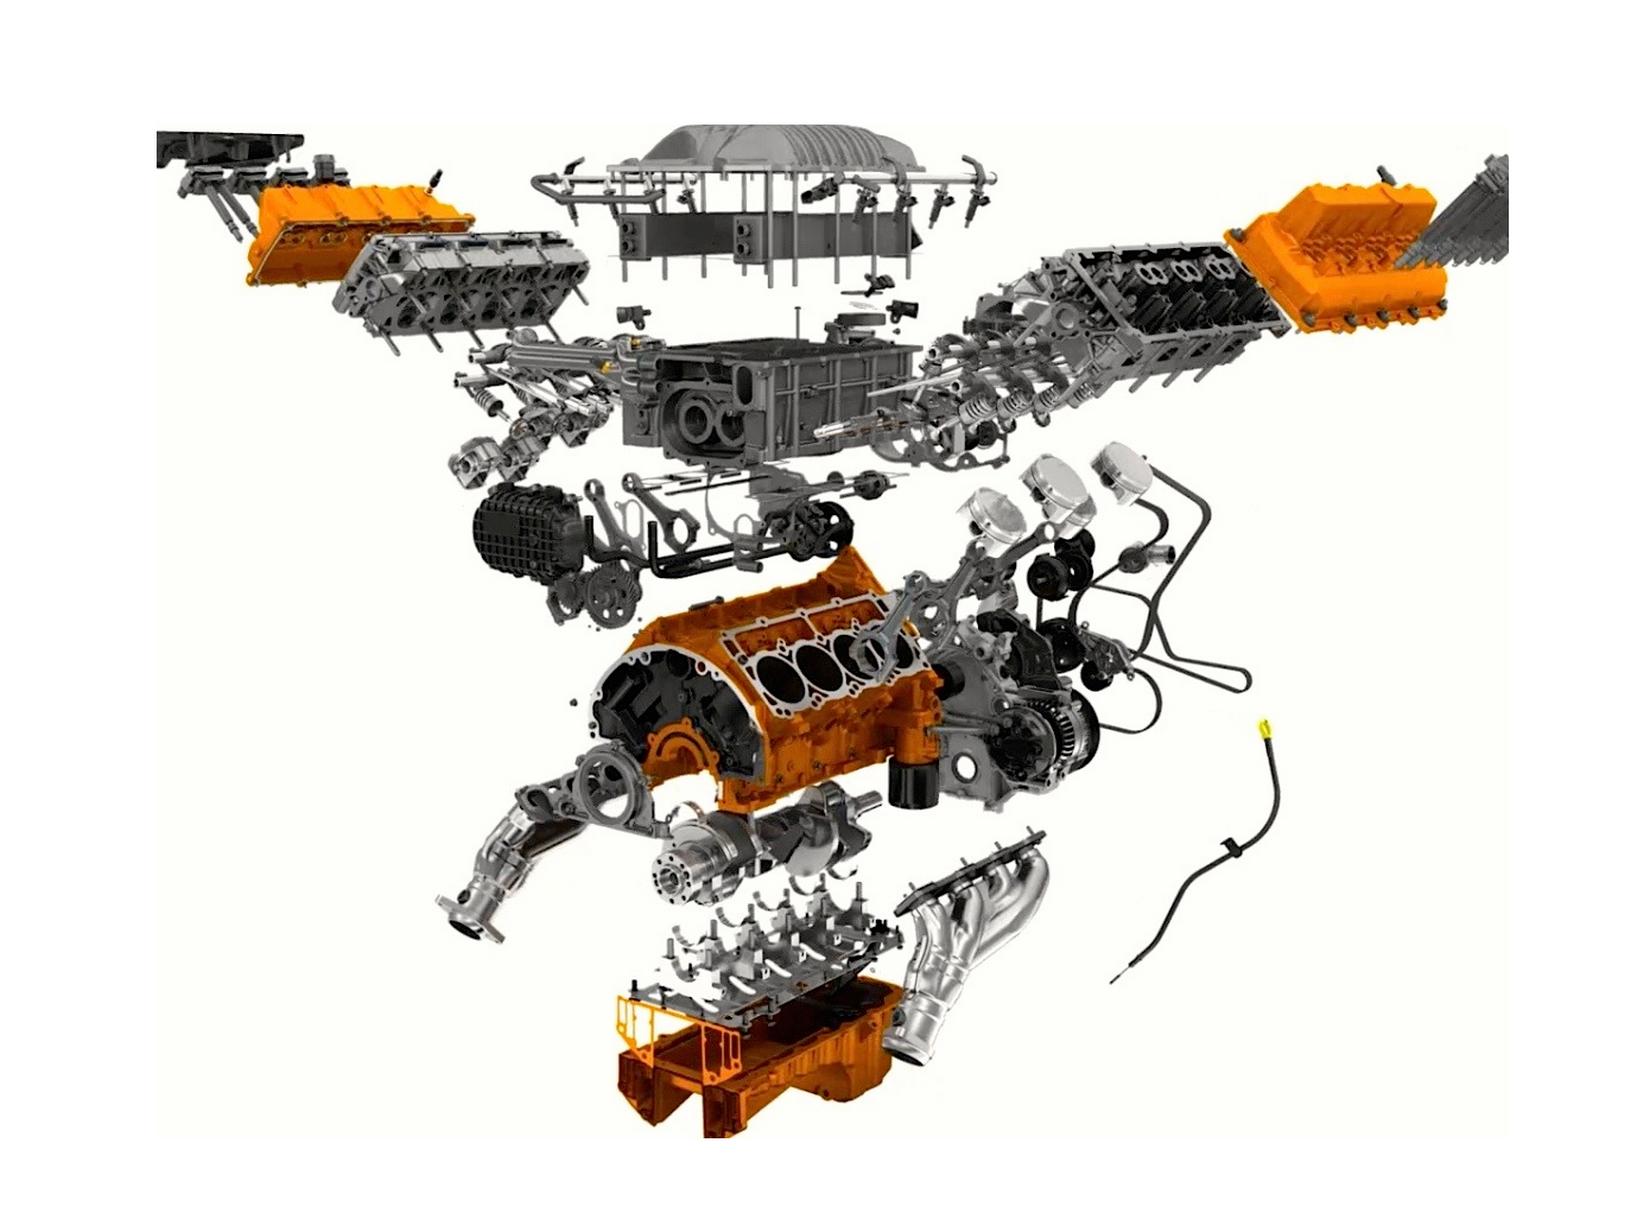 Dodge Hellcat engine - exploded